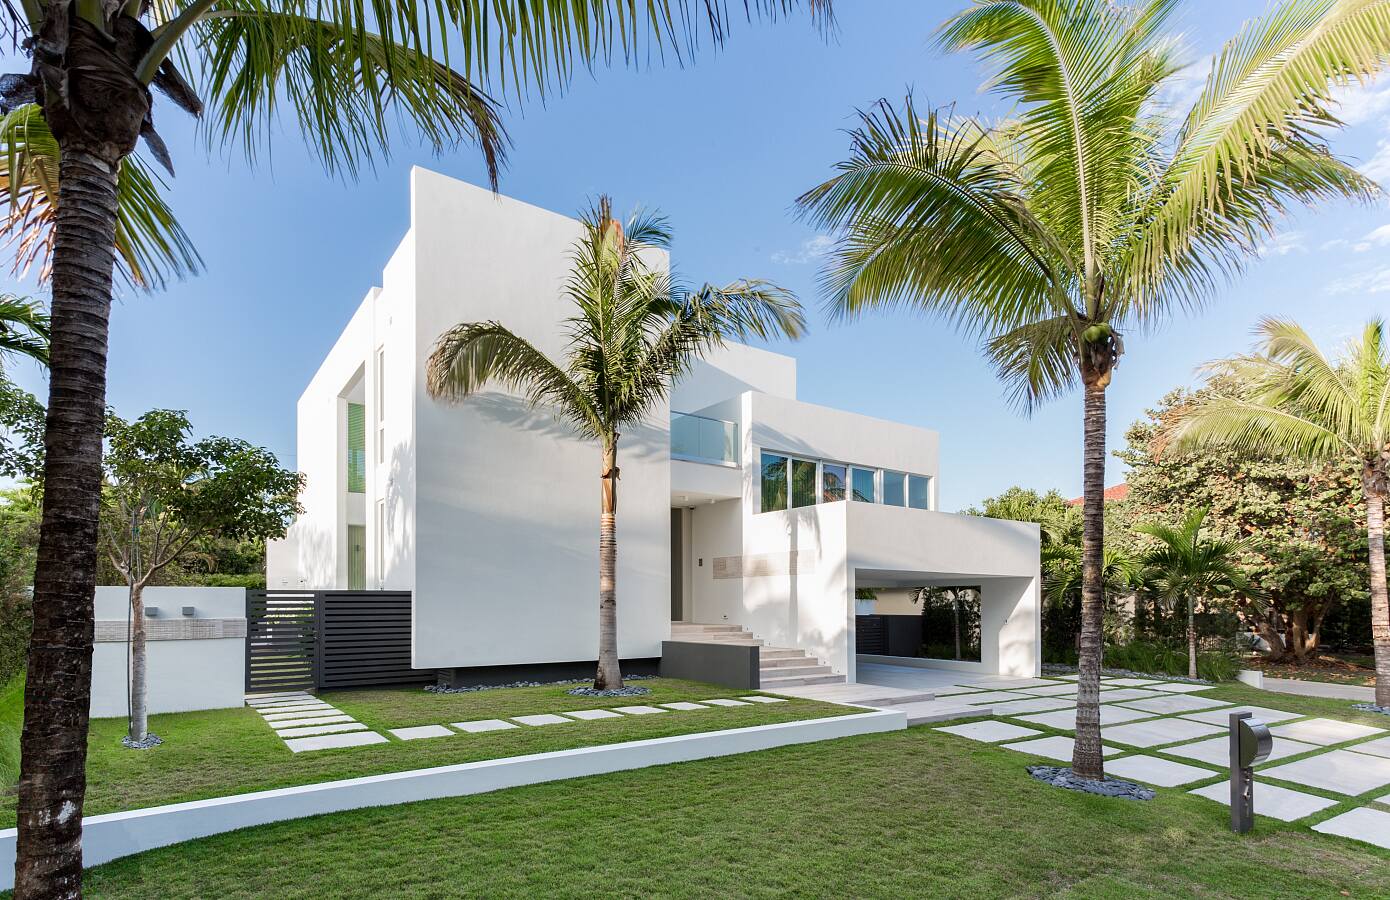 Villa RL by Federico Delrosso Architects